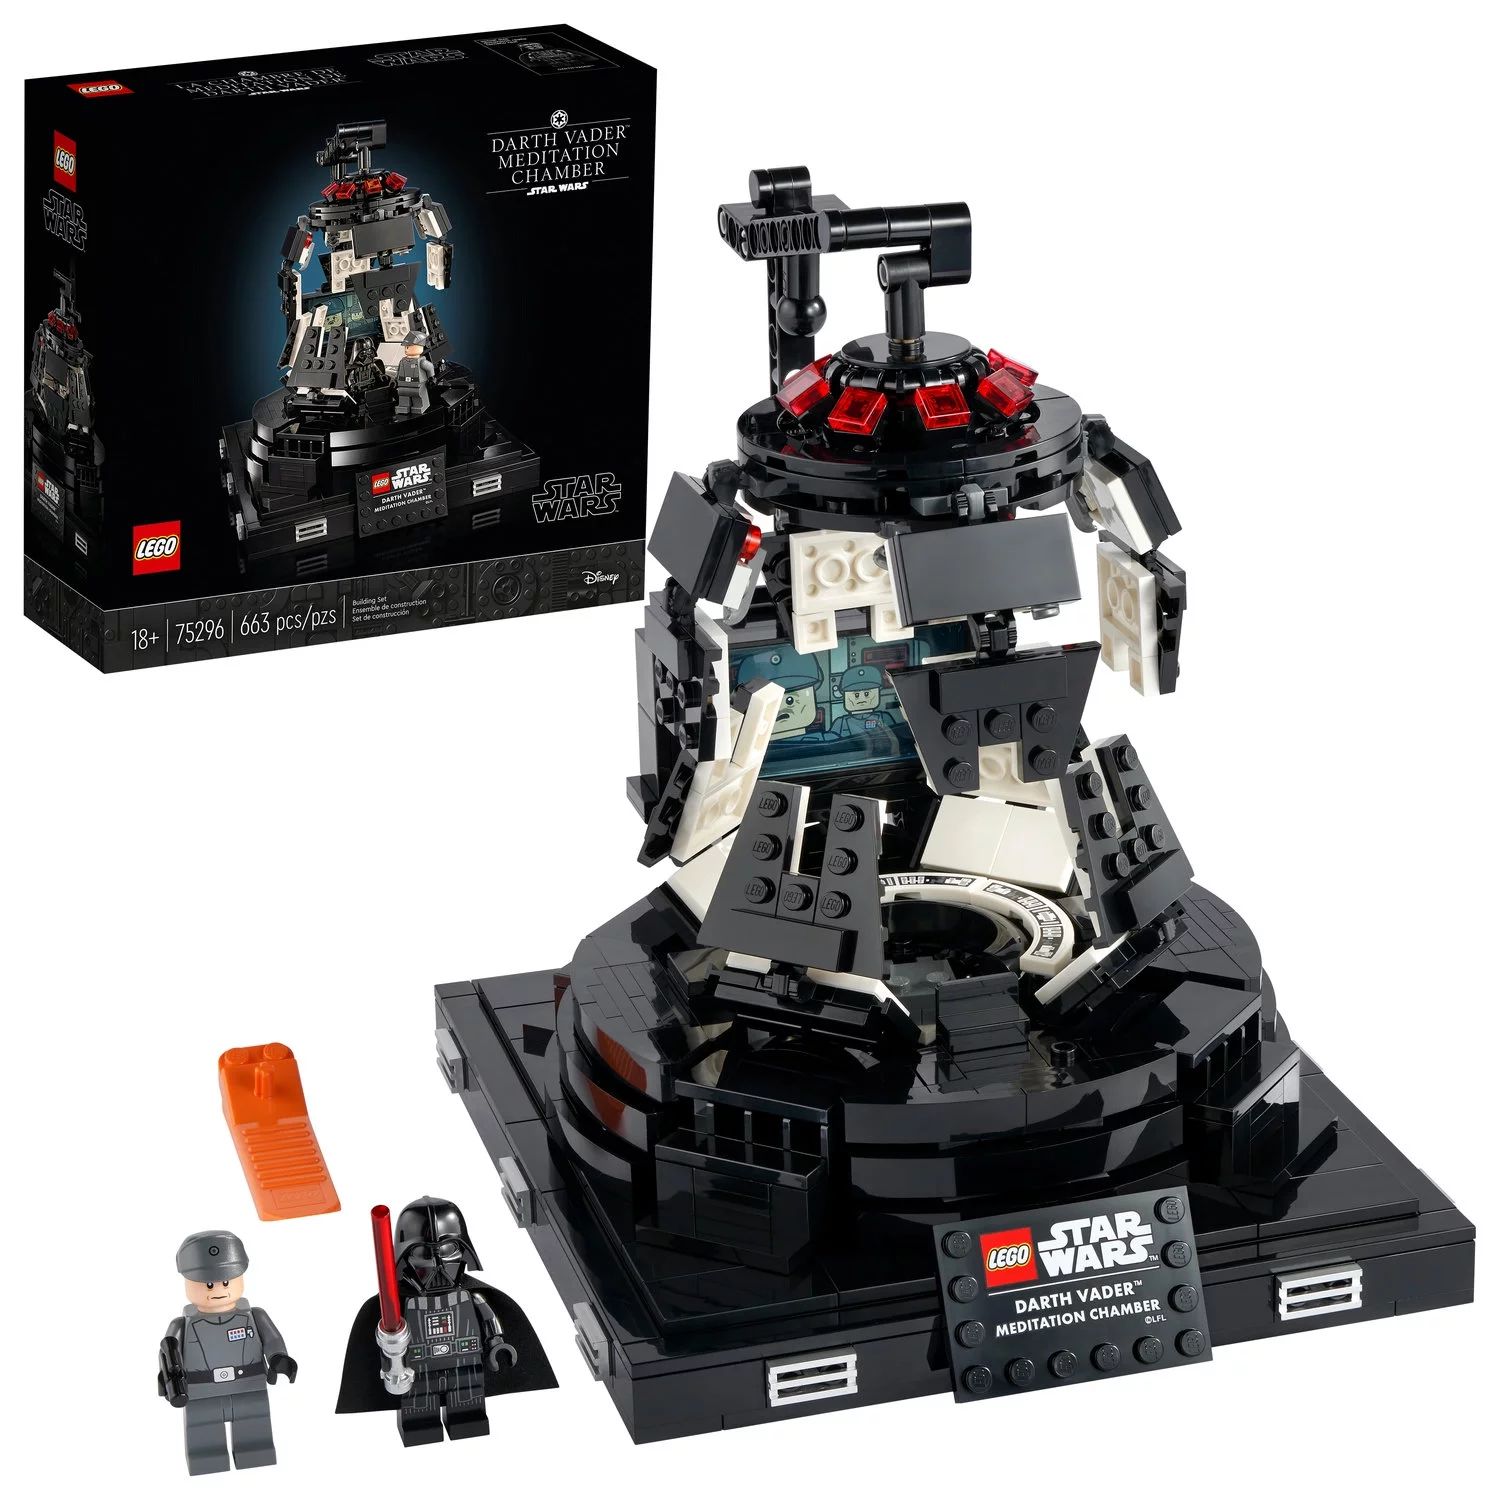 LEGO Star Wars Darth Vader Meditation Chamber 75296 Fun Creative Building Toy (663 Pieces) | Walmart (US)